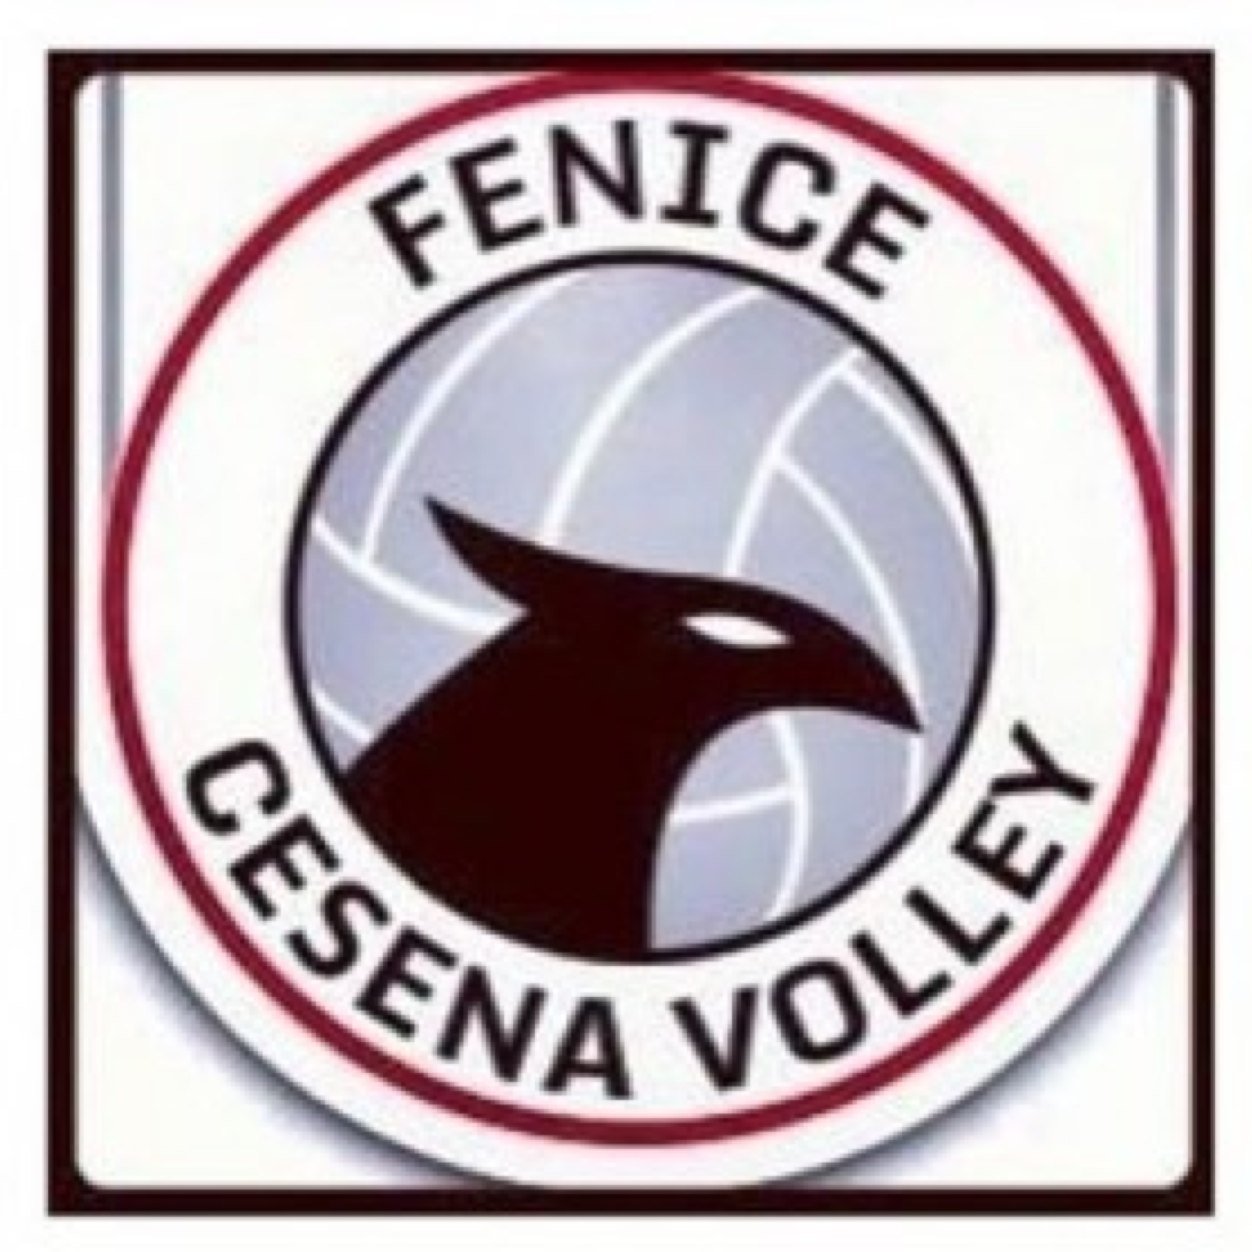 Men's Volleyball Cesena, powered by besport